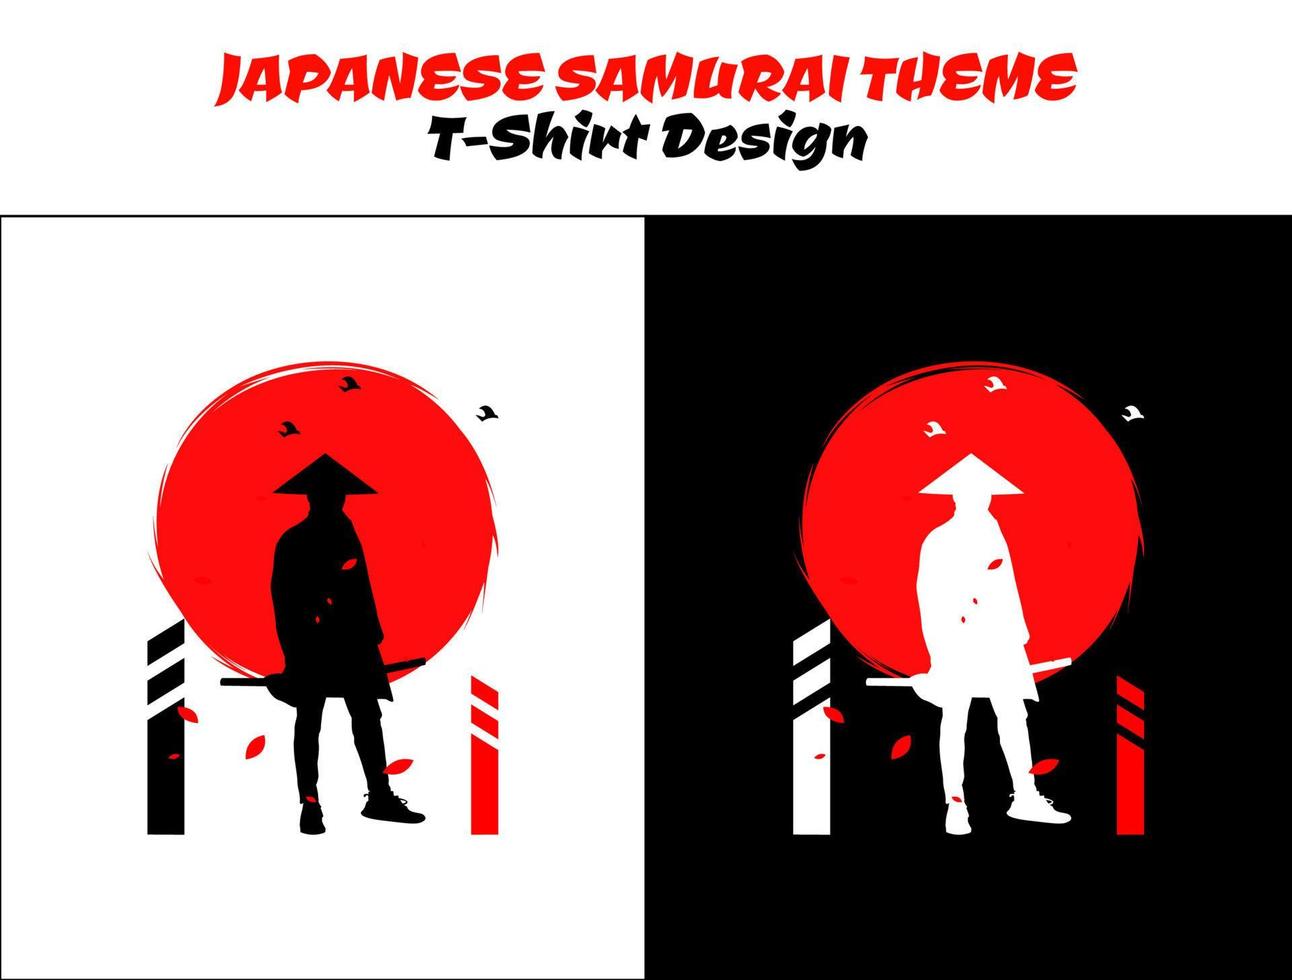 Samurai mit rot Mond T-Shirt Design. städtisch Samurai. Samurai Vektor Illustration. Silhouette Japan Samurai Vektor zum Design T-Shirt Konzept.